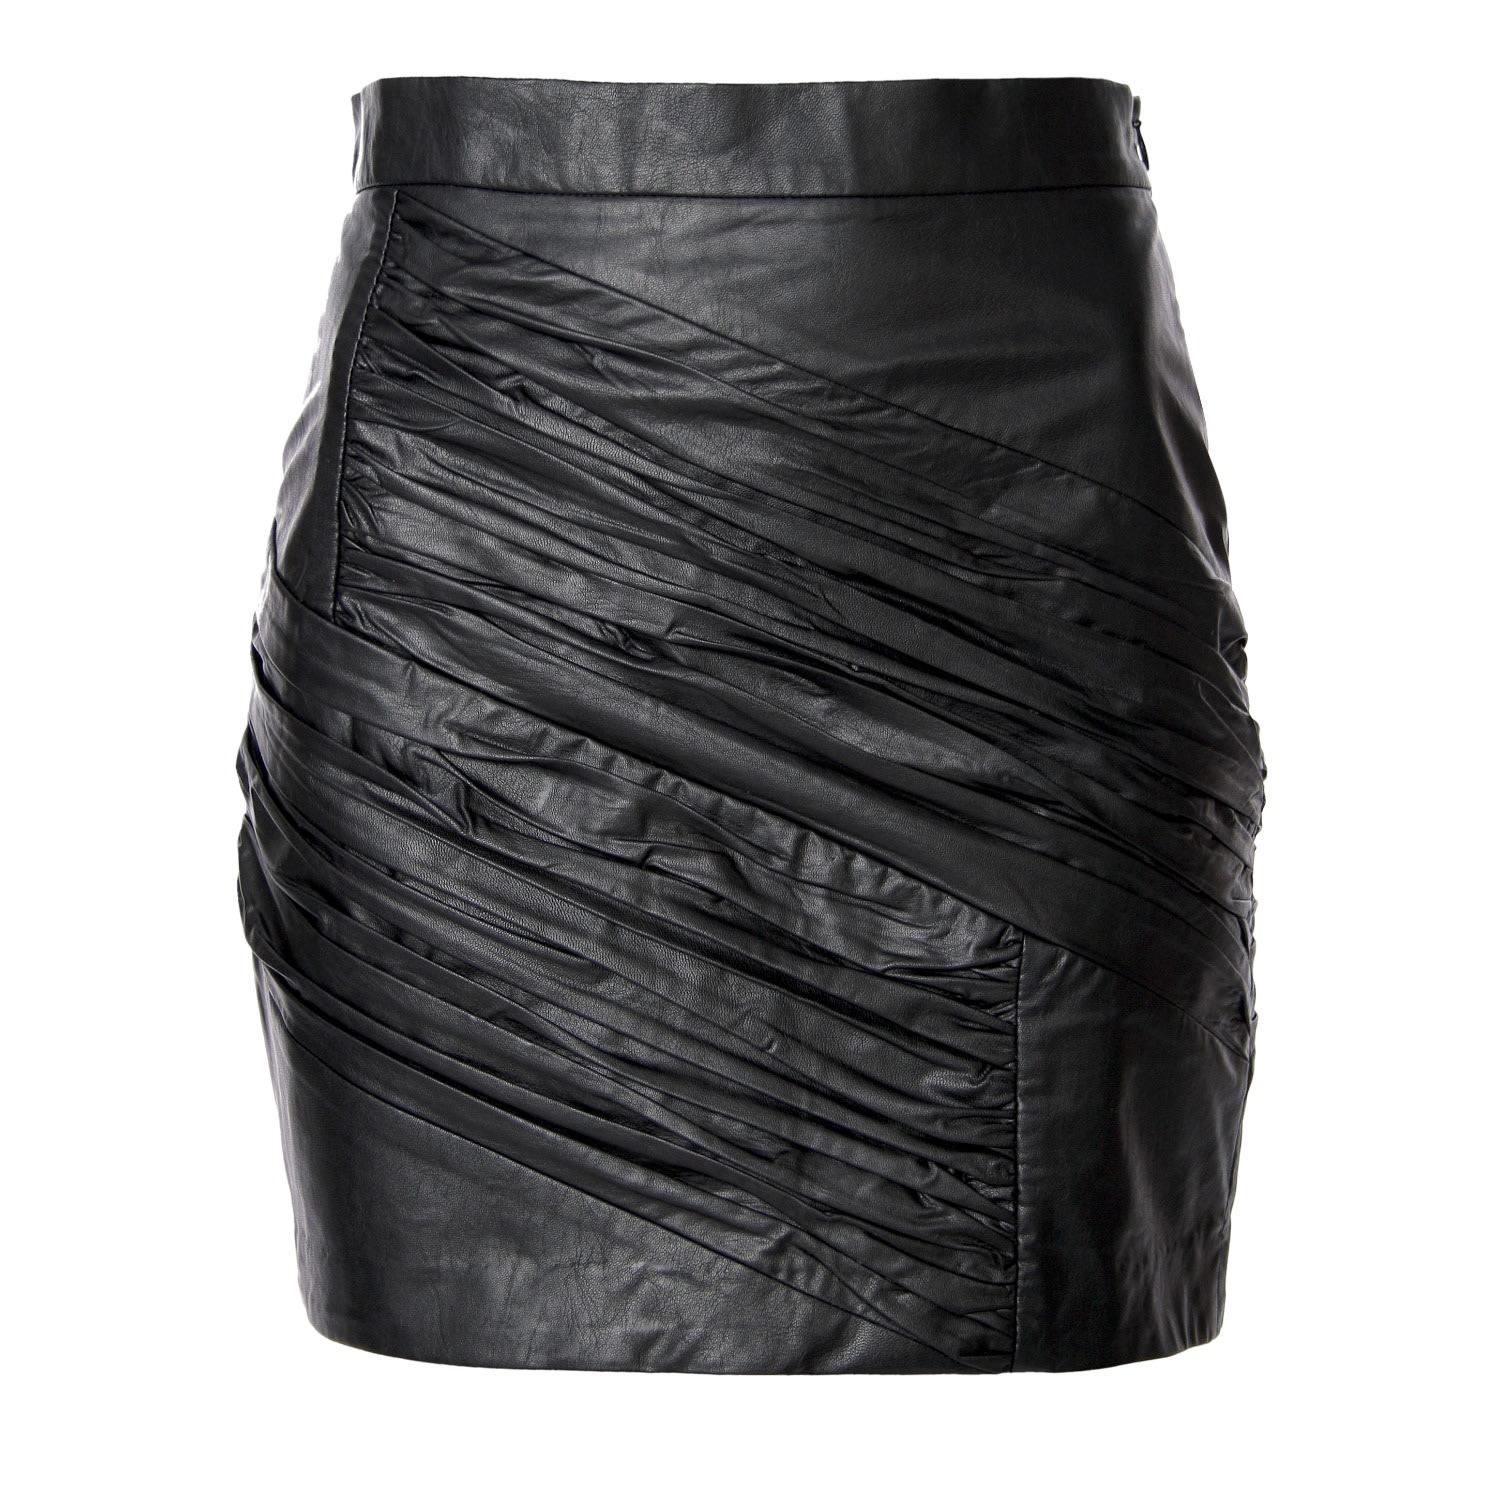 Aggi Women's Jolie Cynical Black Creased Vegan Leather Mini Skirt